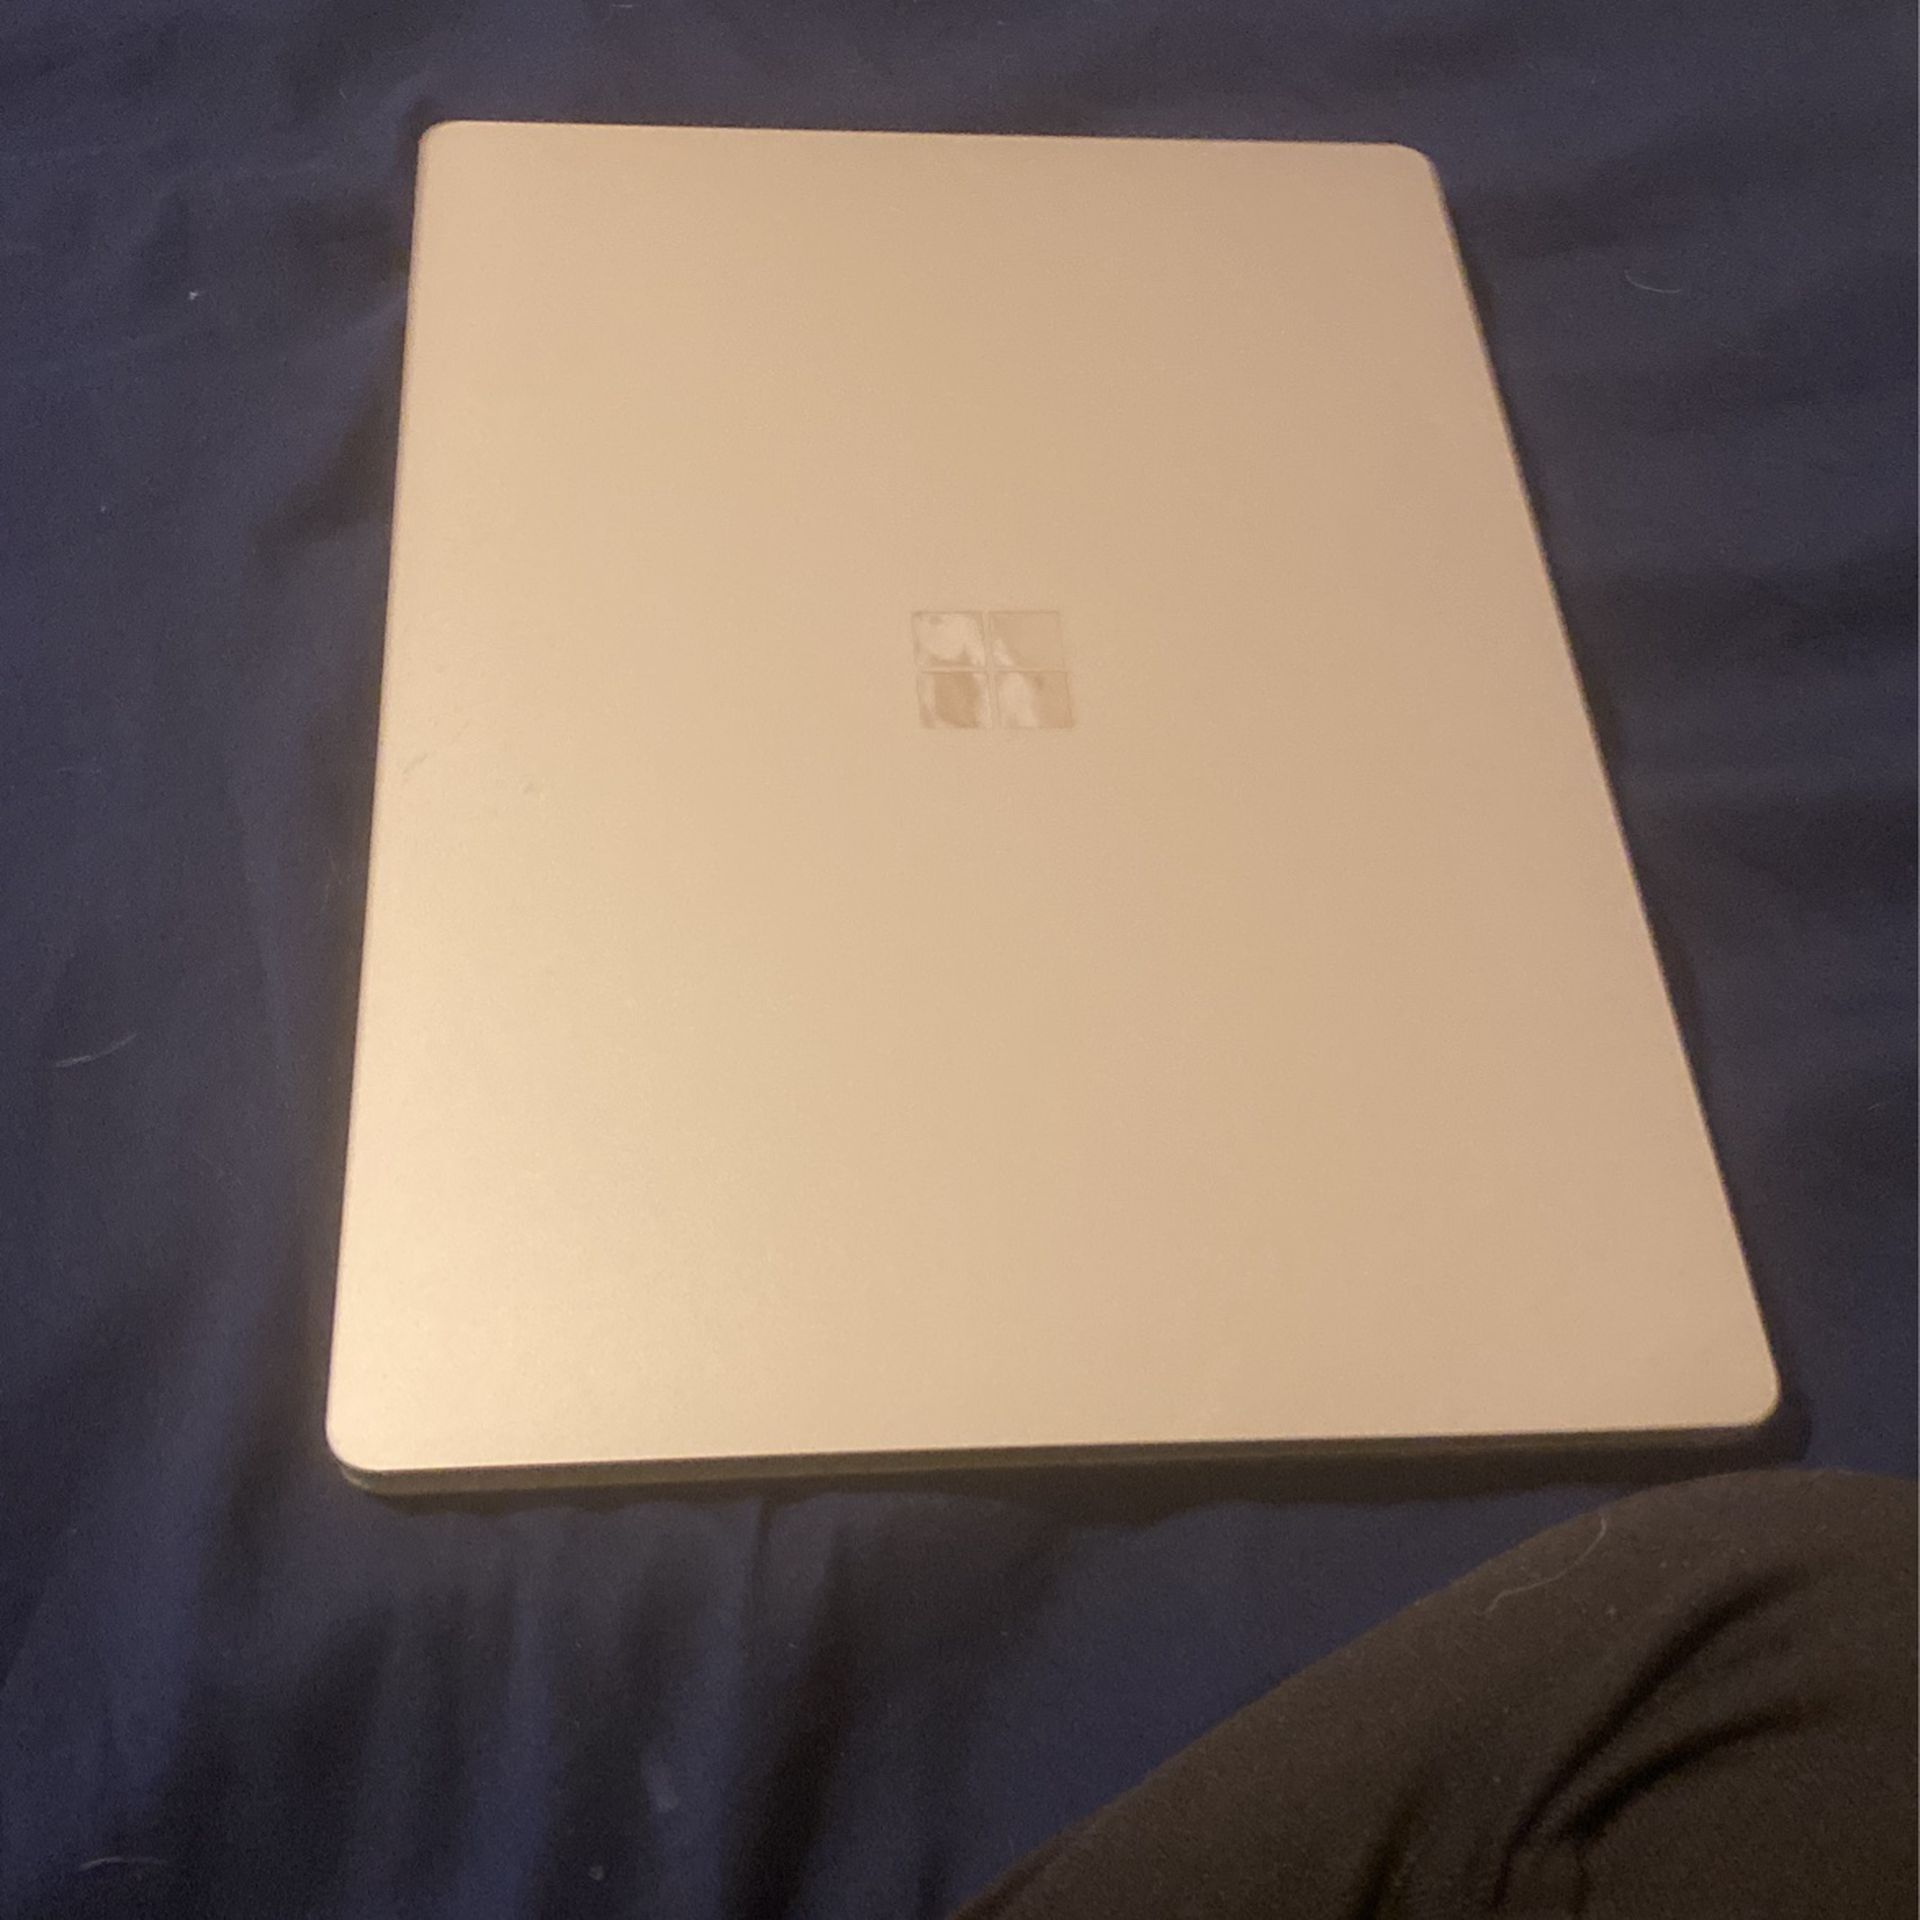 Surface Laptop 5 